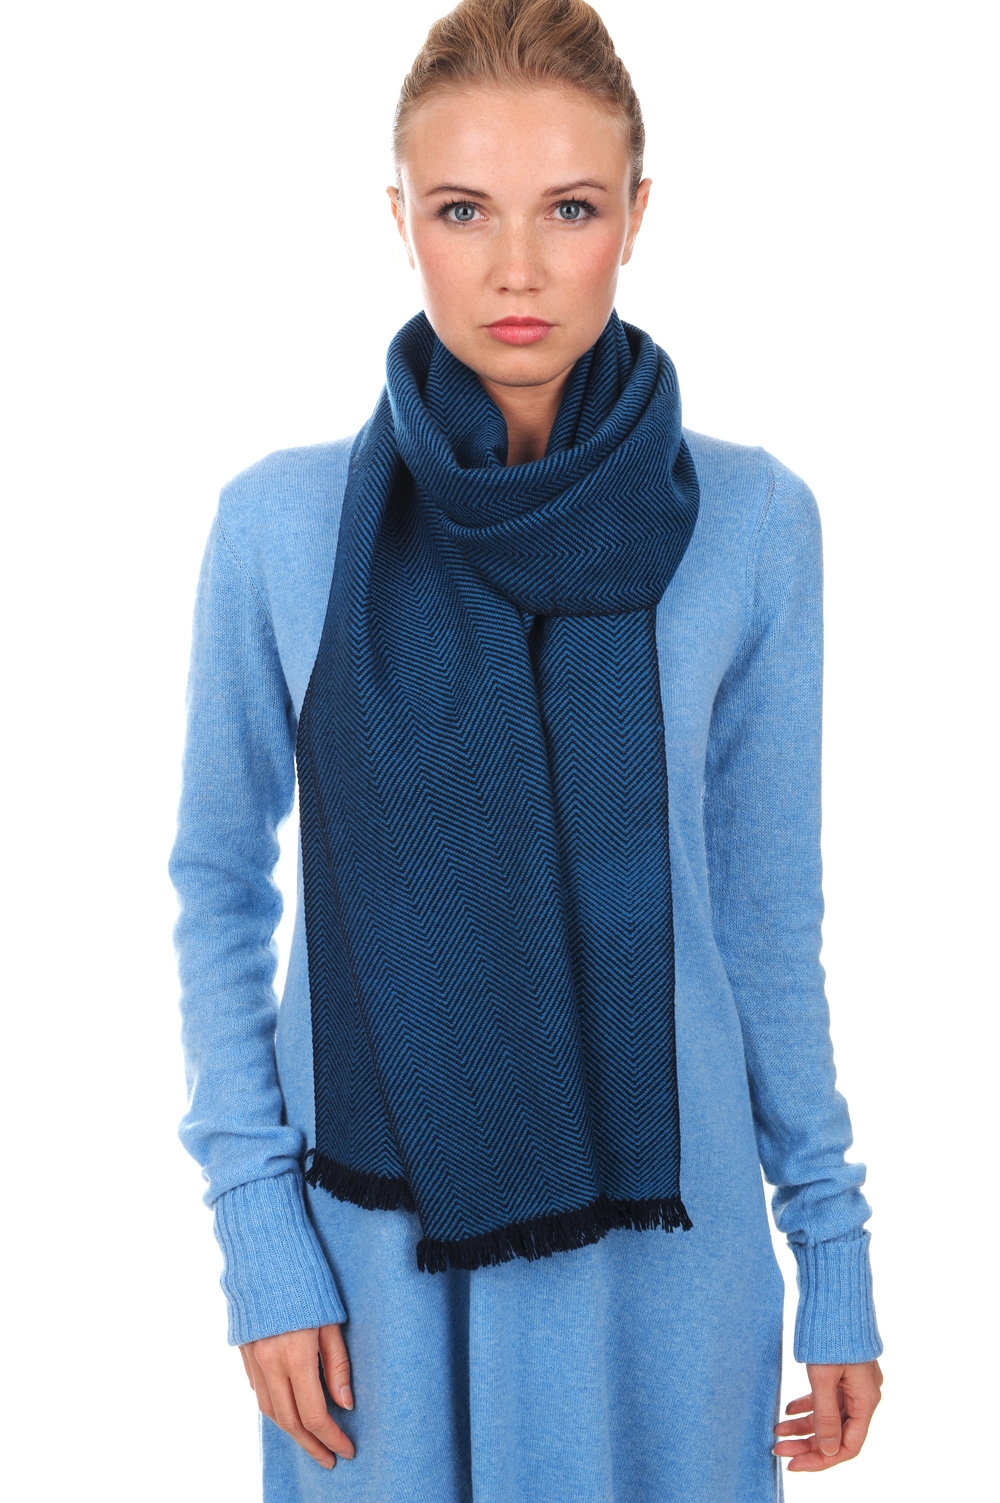 Cashmere accessories scarf mufflers orage blue 200 x 35 cm